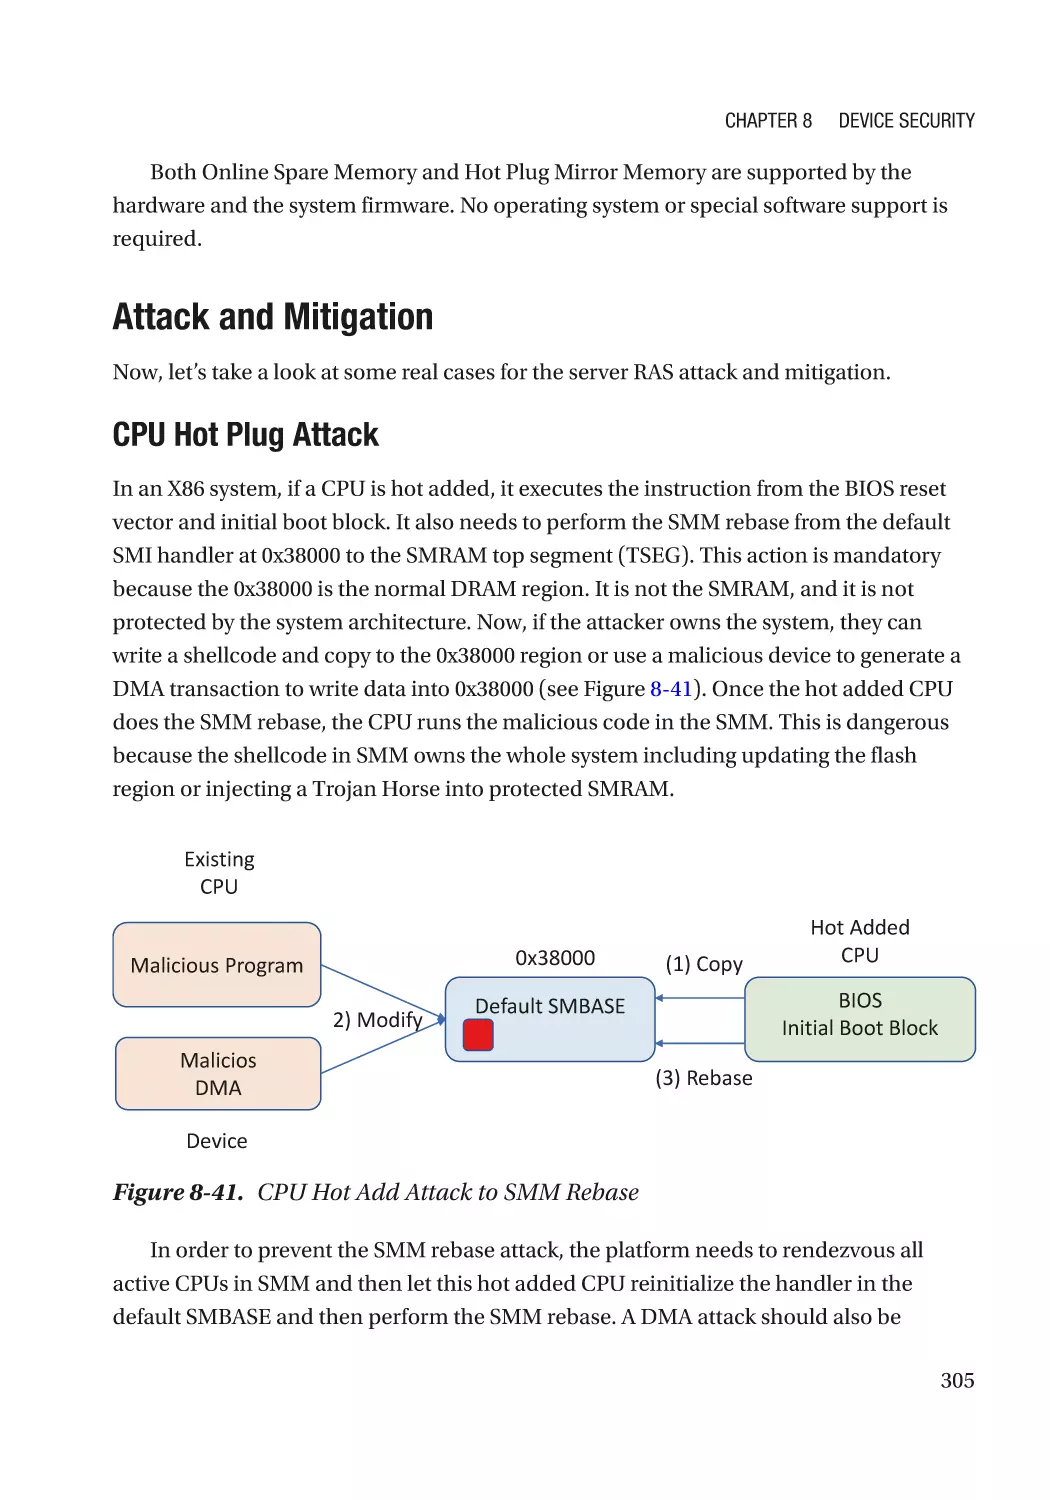 Attack and Mitigation
CPU Hot Plug Attack